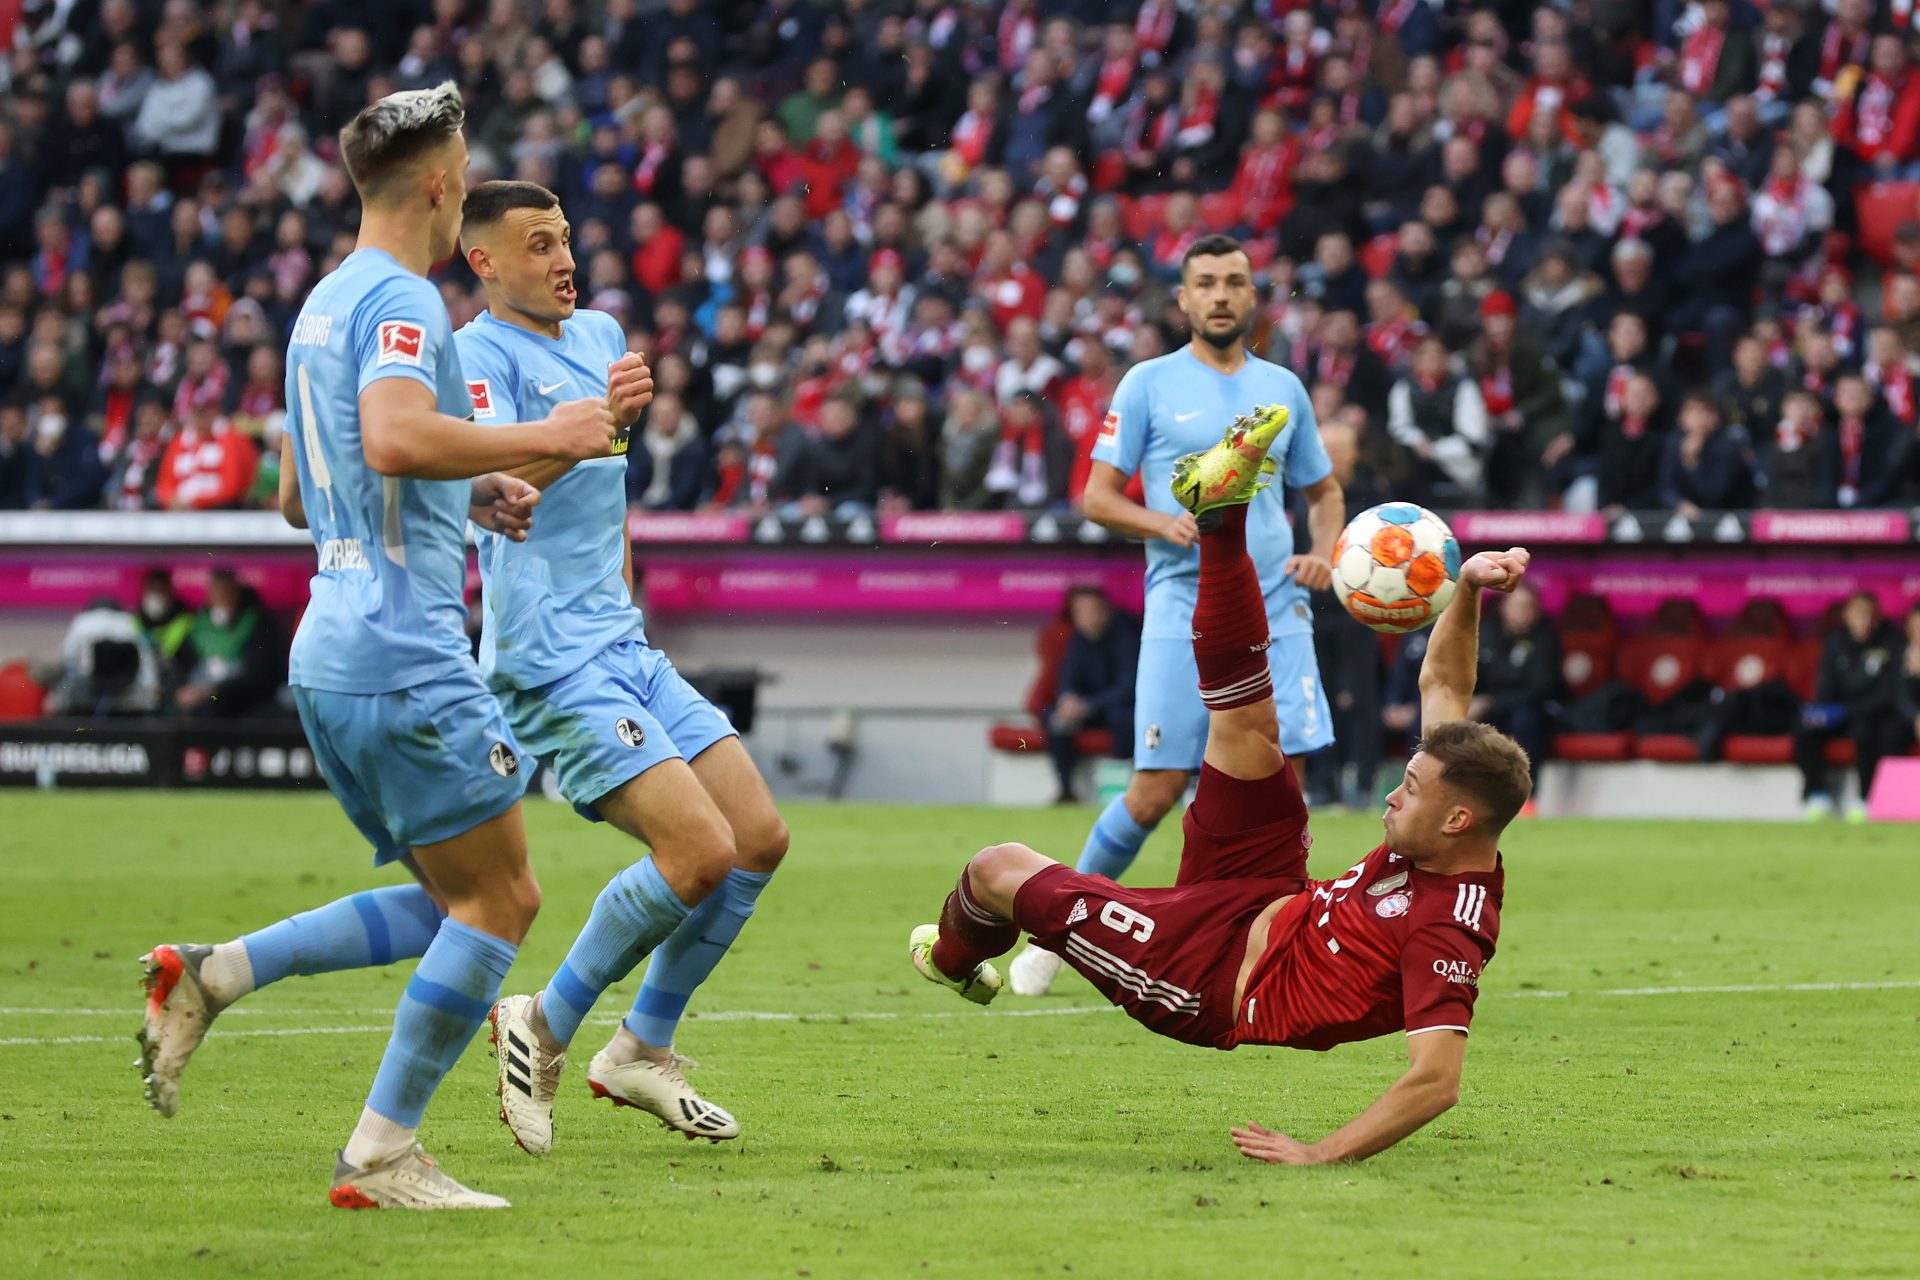 Bayern Munich’s Joshua Kimmich tries an overhead kick during their Bundesliga win against SC Freiburg. Photo: Alexander Hassenstein/Getty Images